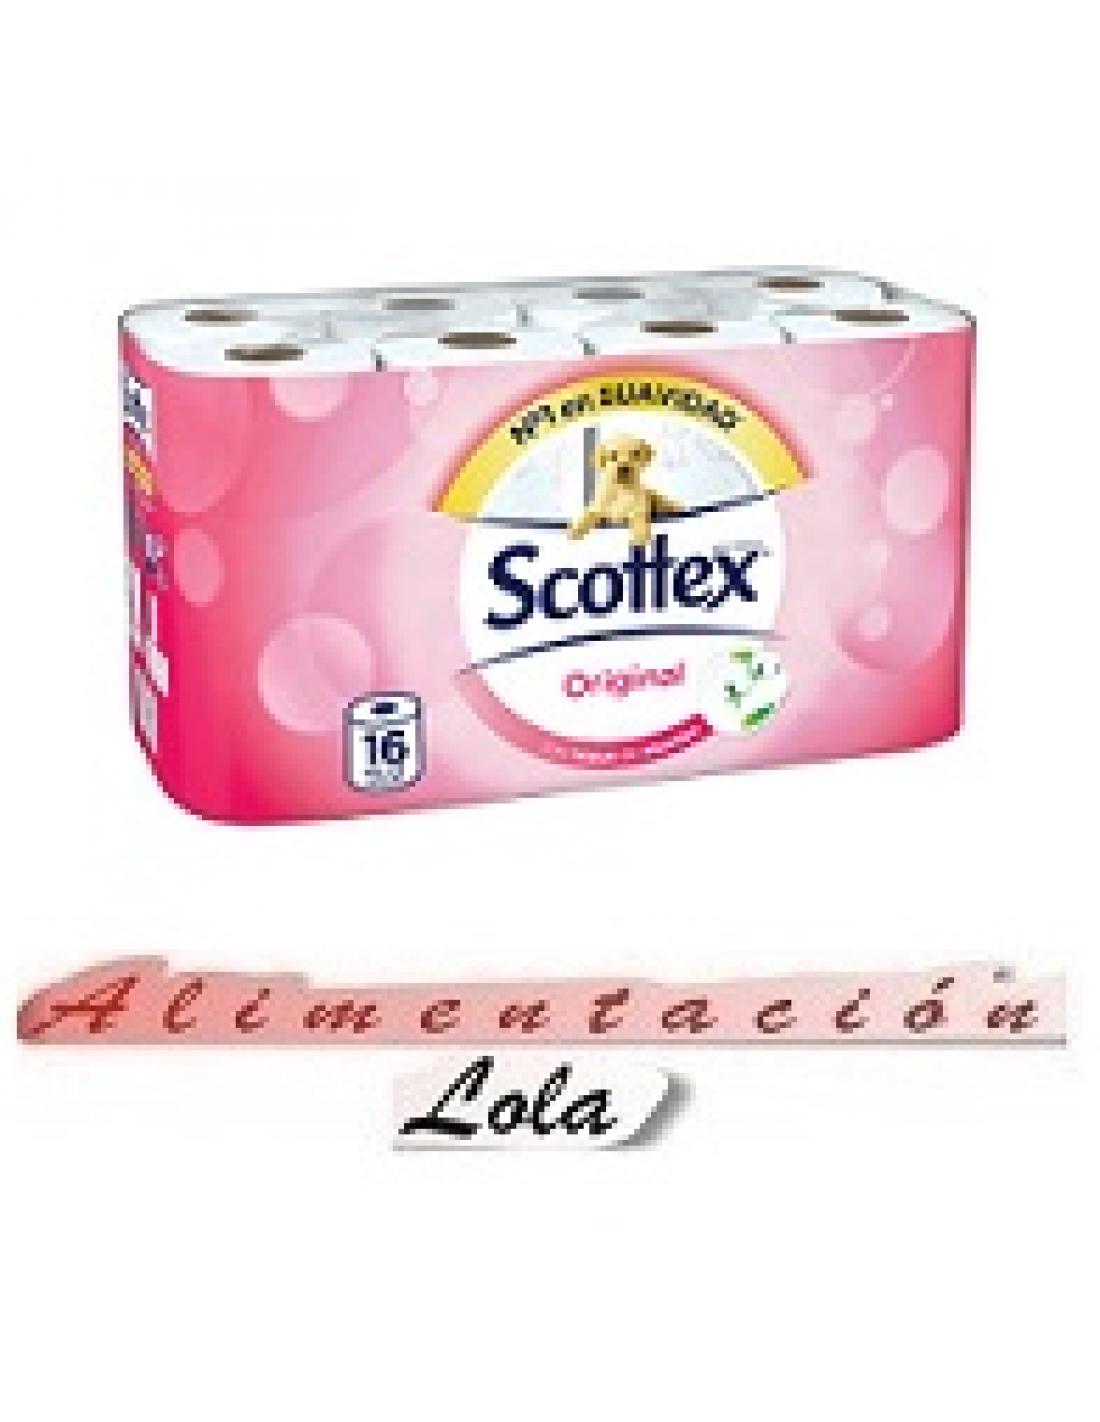 Papel higiénico scottex (16 unidades